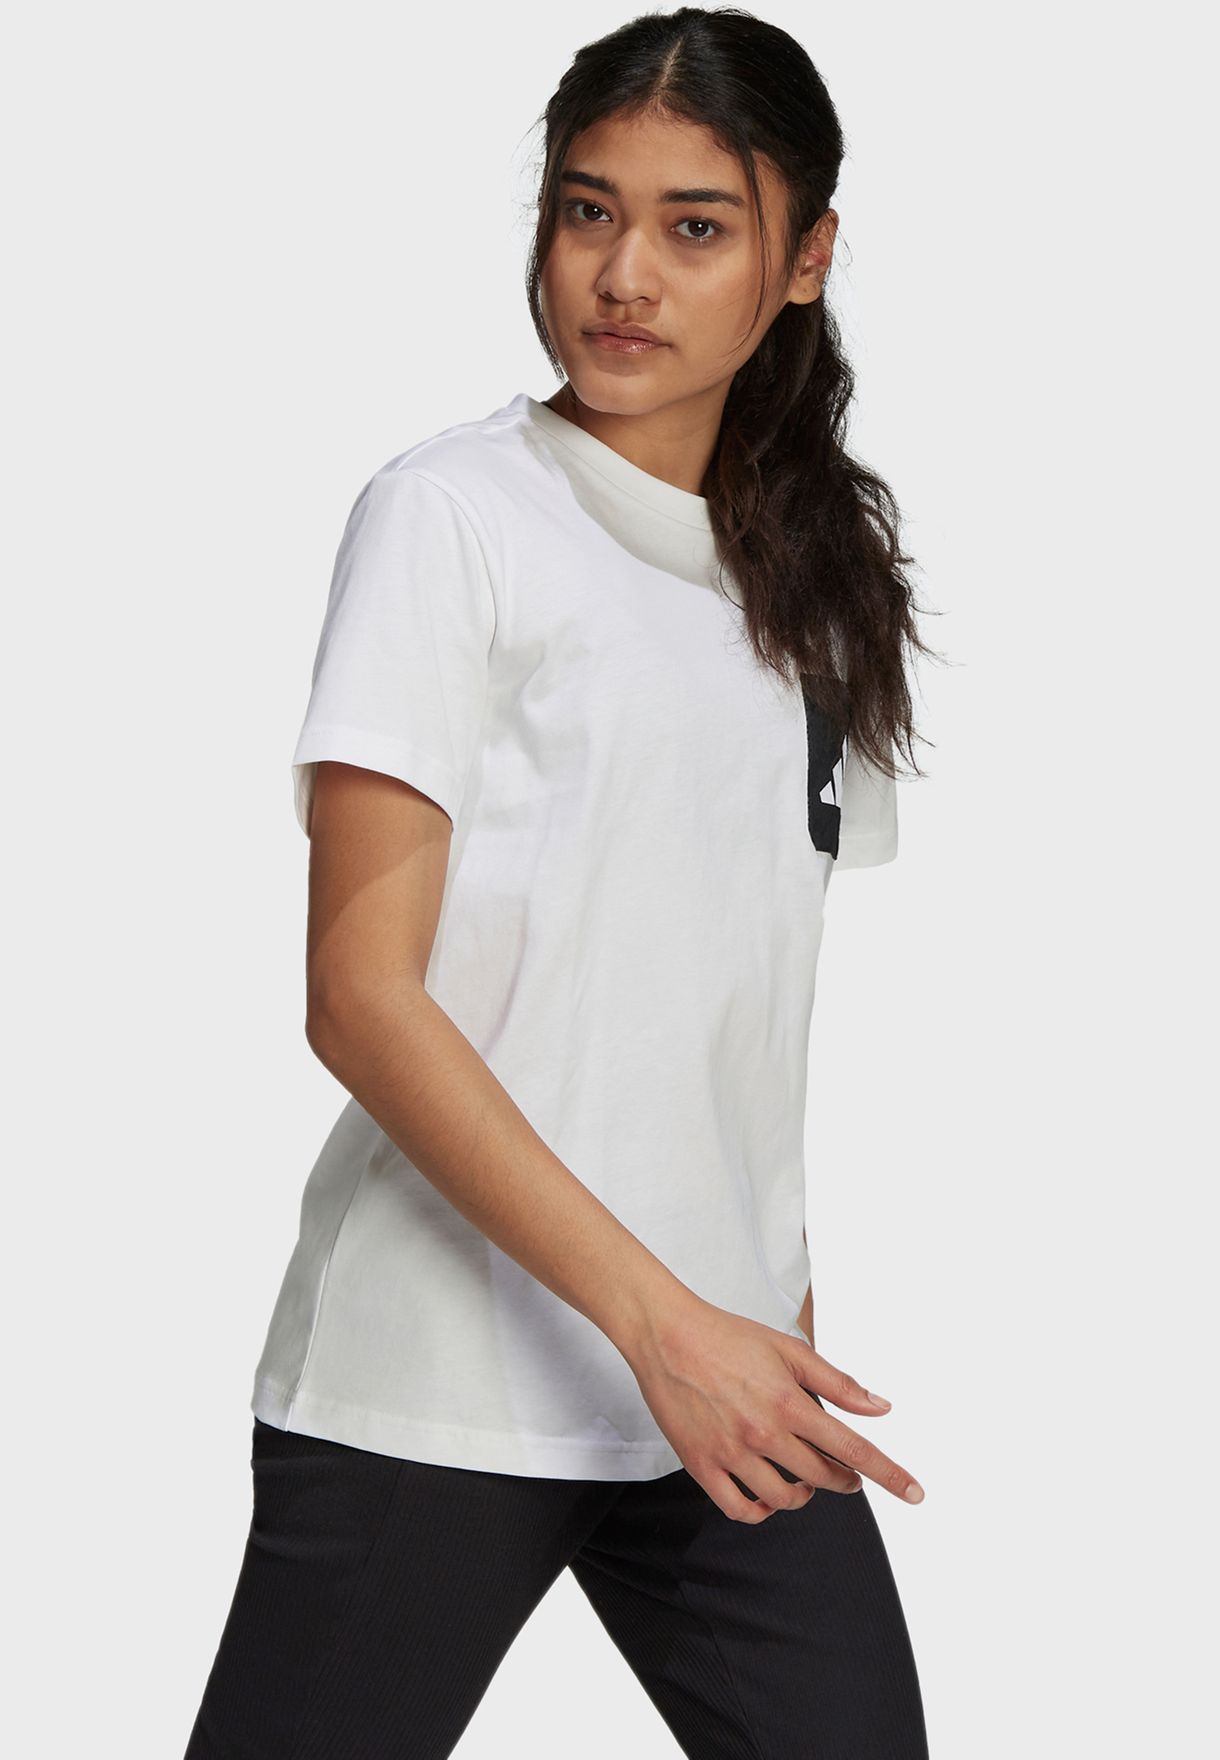 Lace Camo Graphic 1 T-Shirt